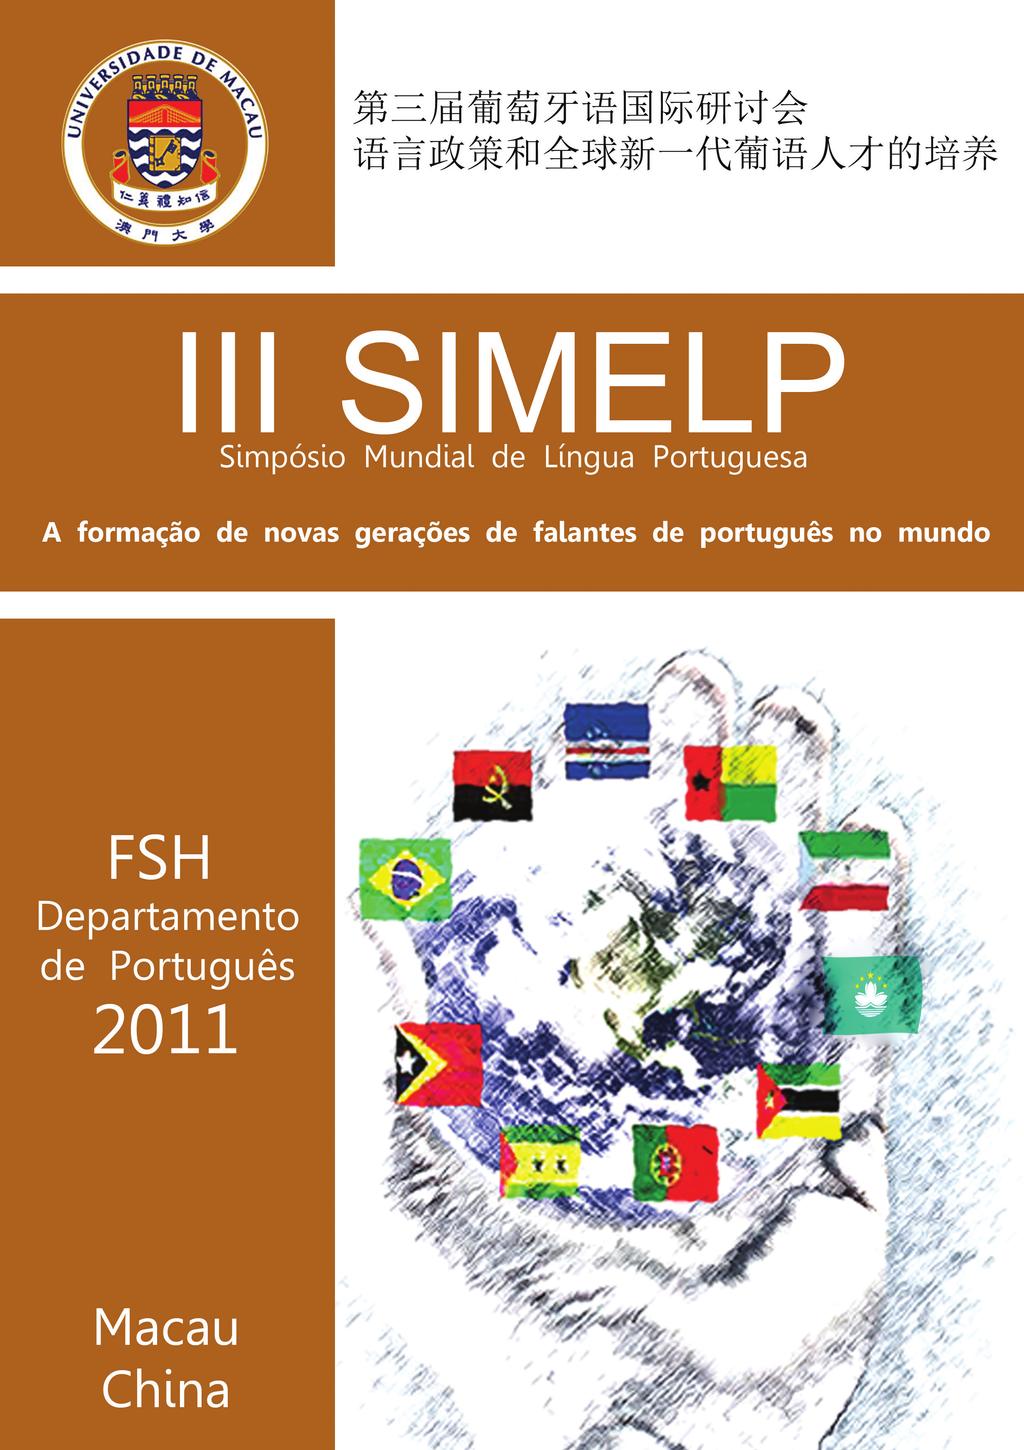 III SIMELP Simpósio Mundial de Estudos de Língua Portuguesa